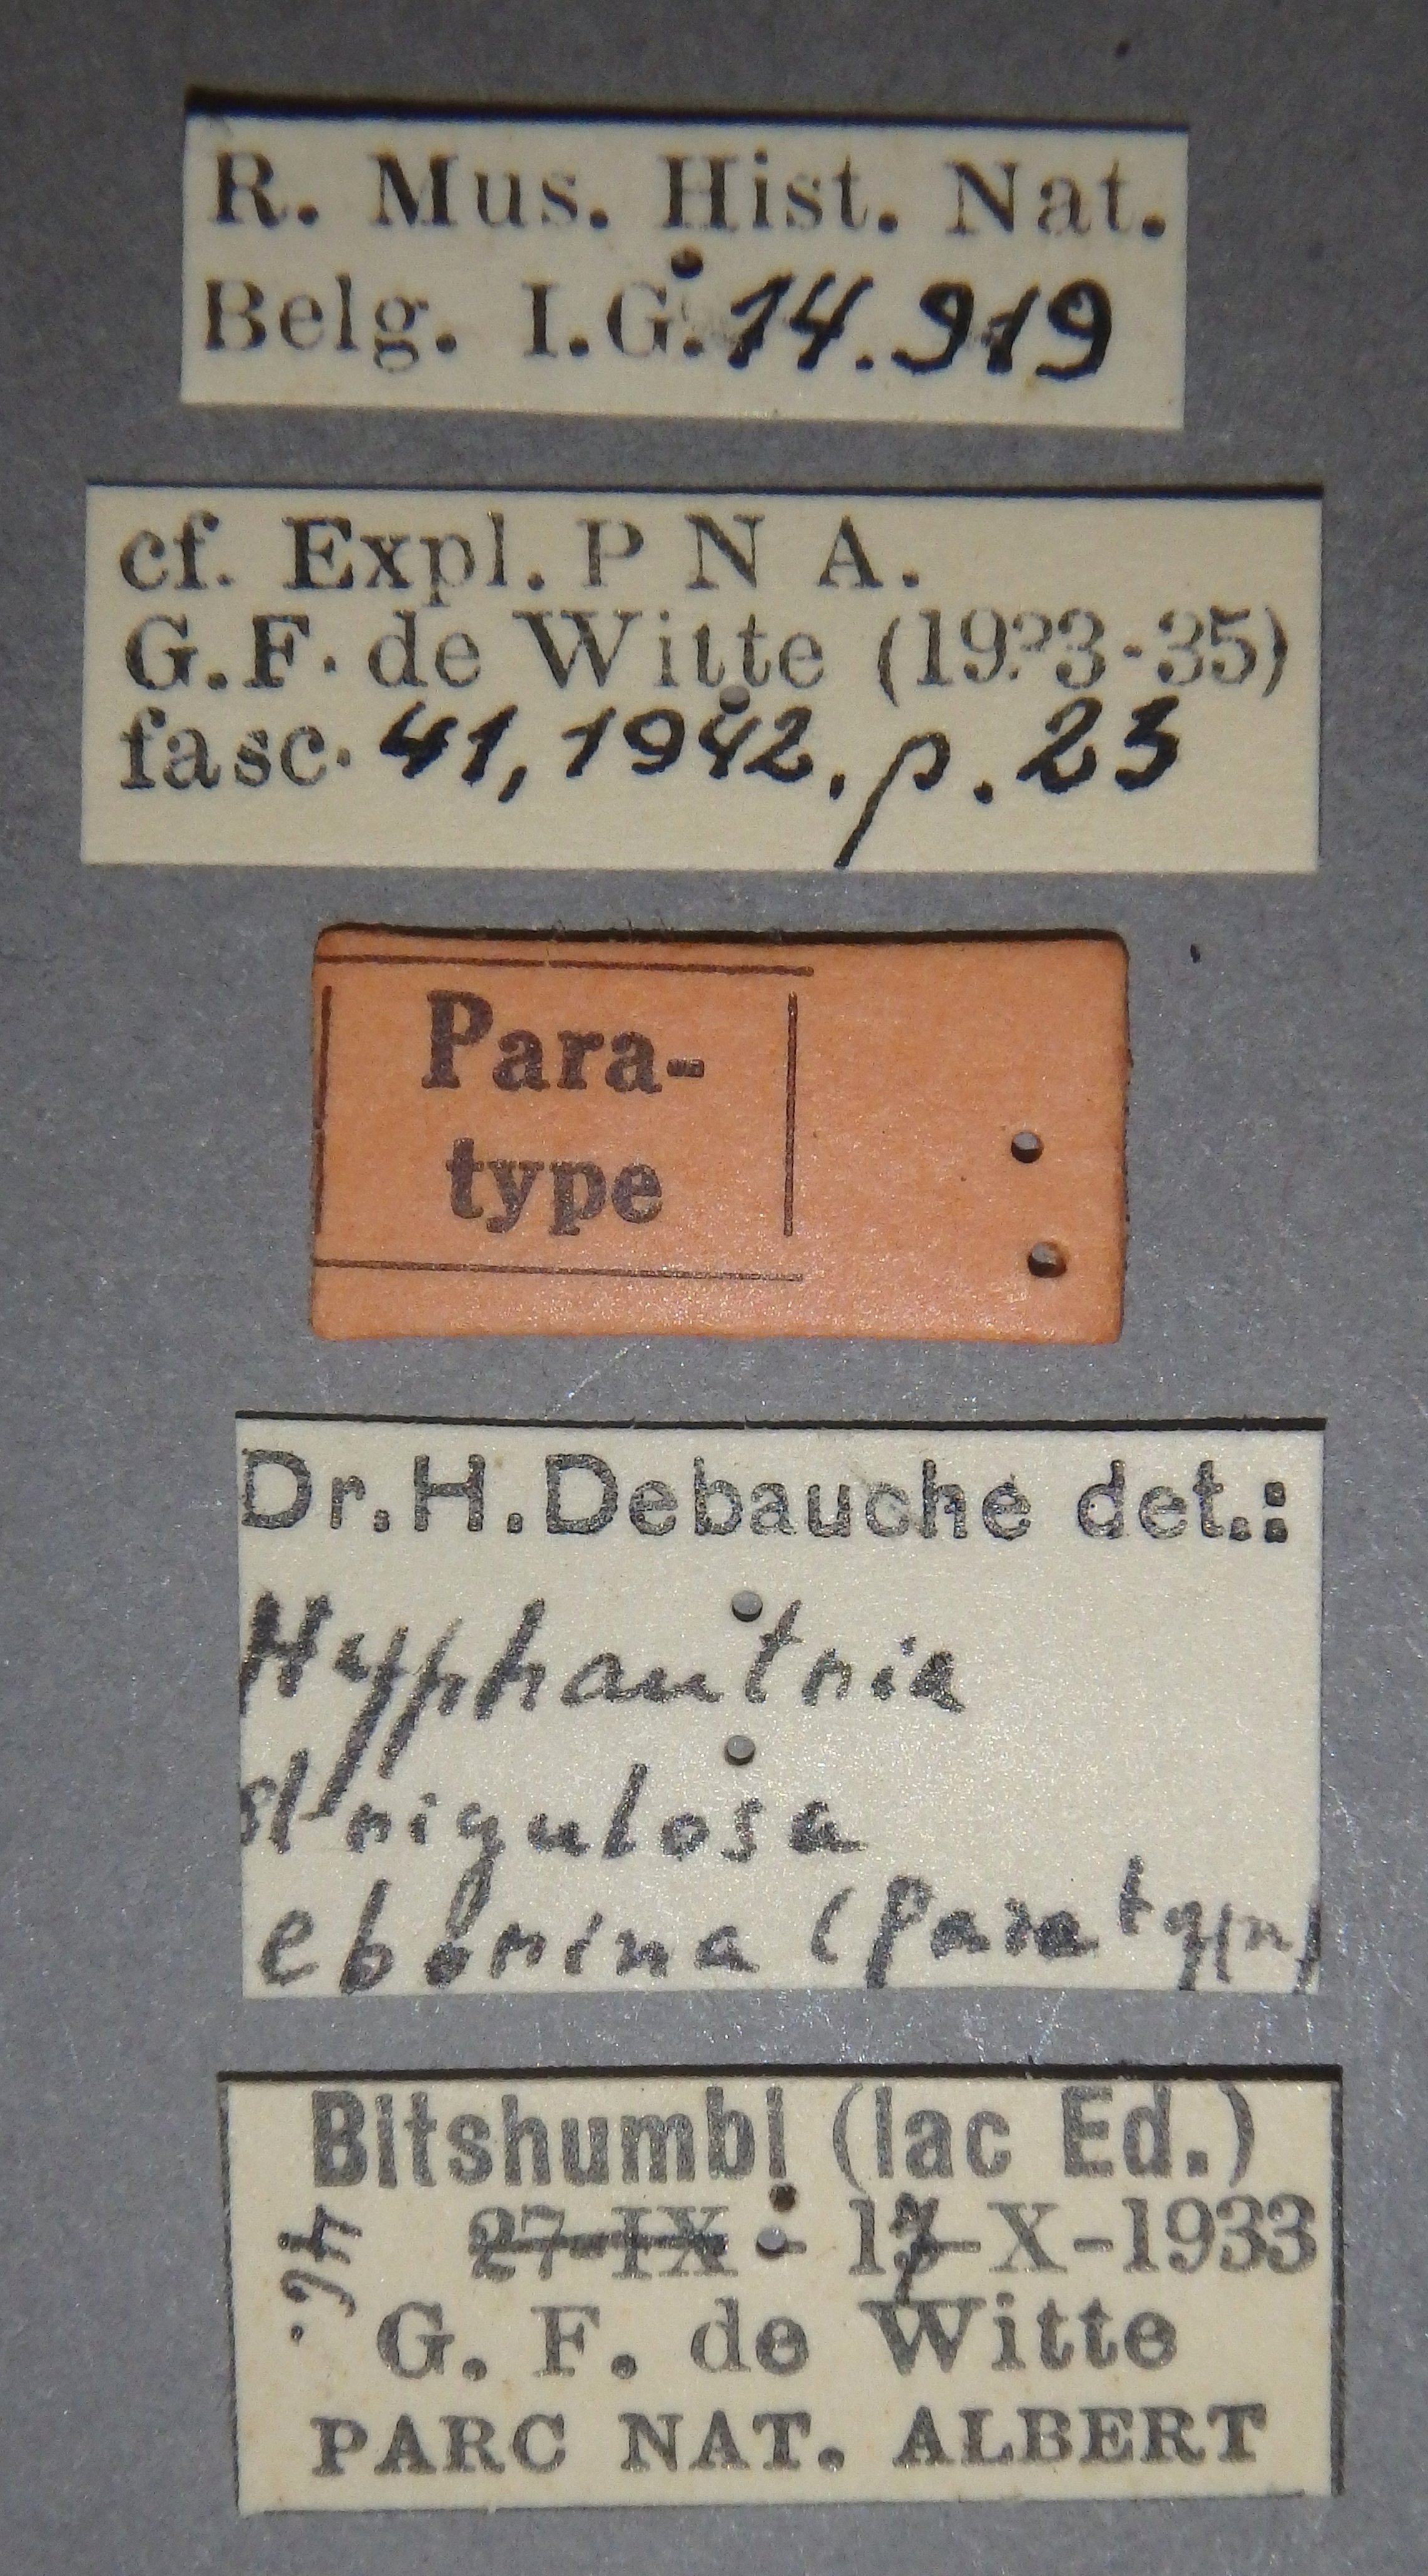 Hyphantria strigulosa eborina pt Lb.jpg